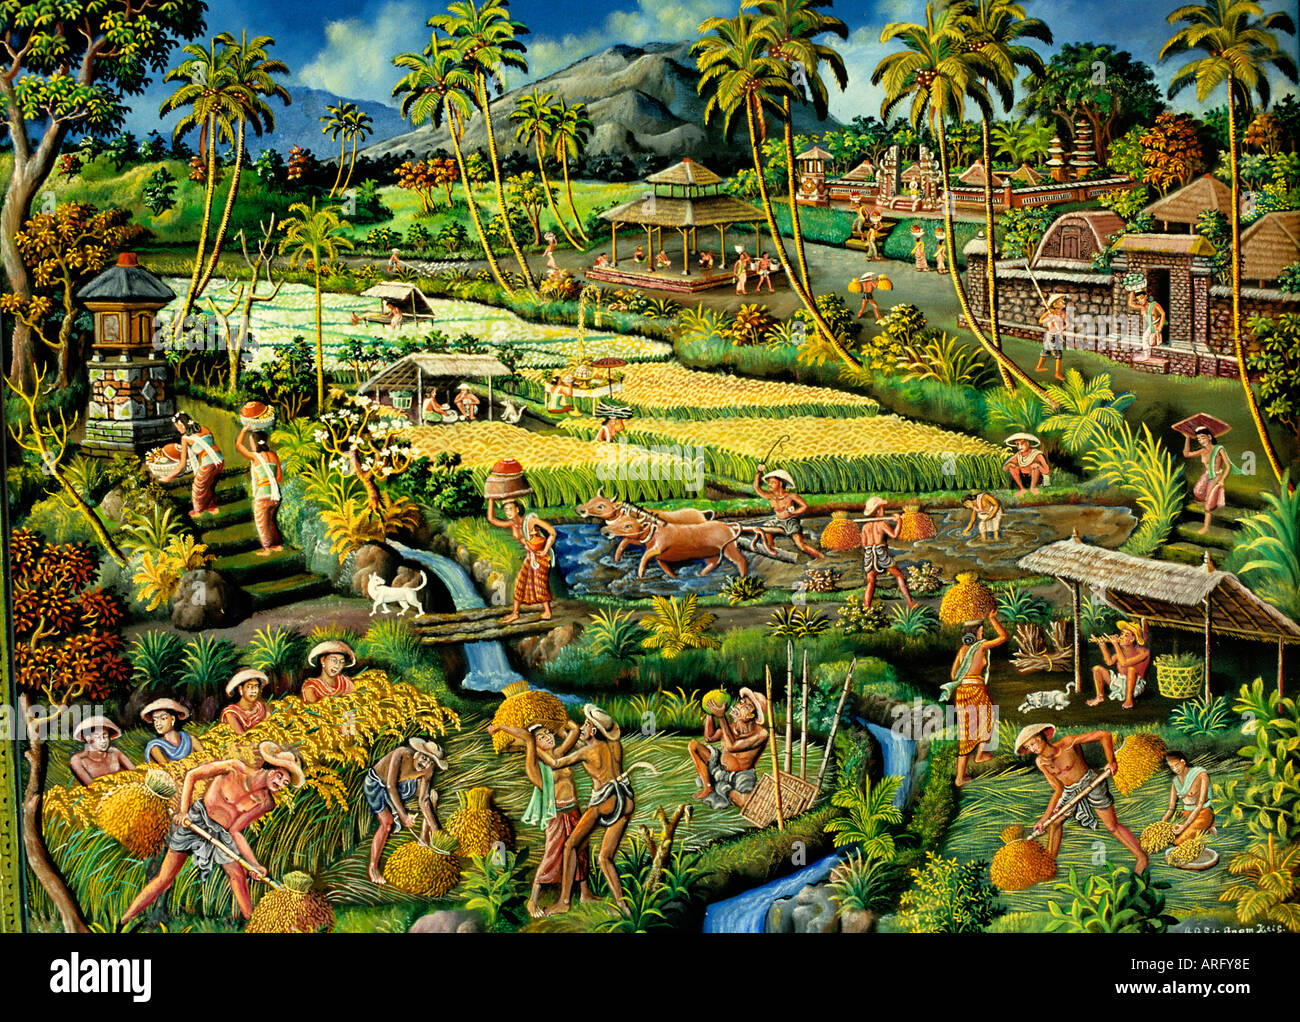 Indonesia Bali Ubud Arte Pintura Escultura pintor Fotografía de stock -  Alamy